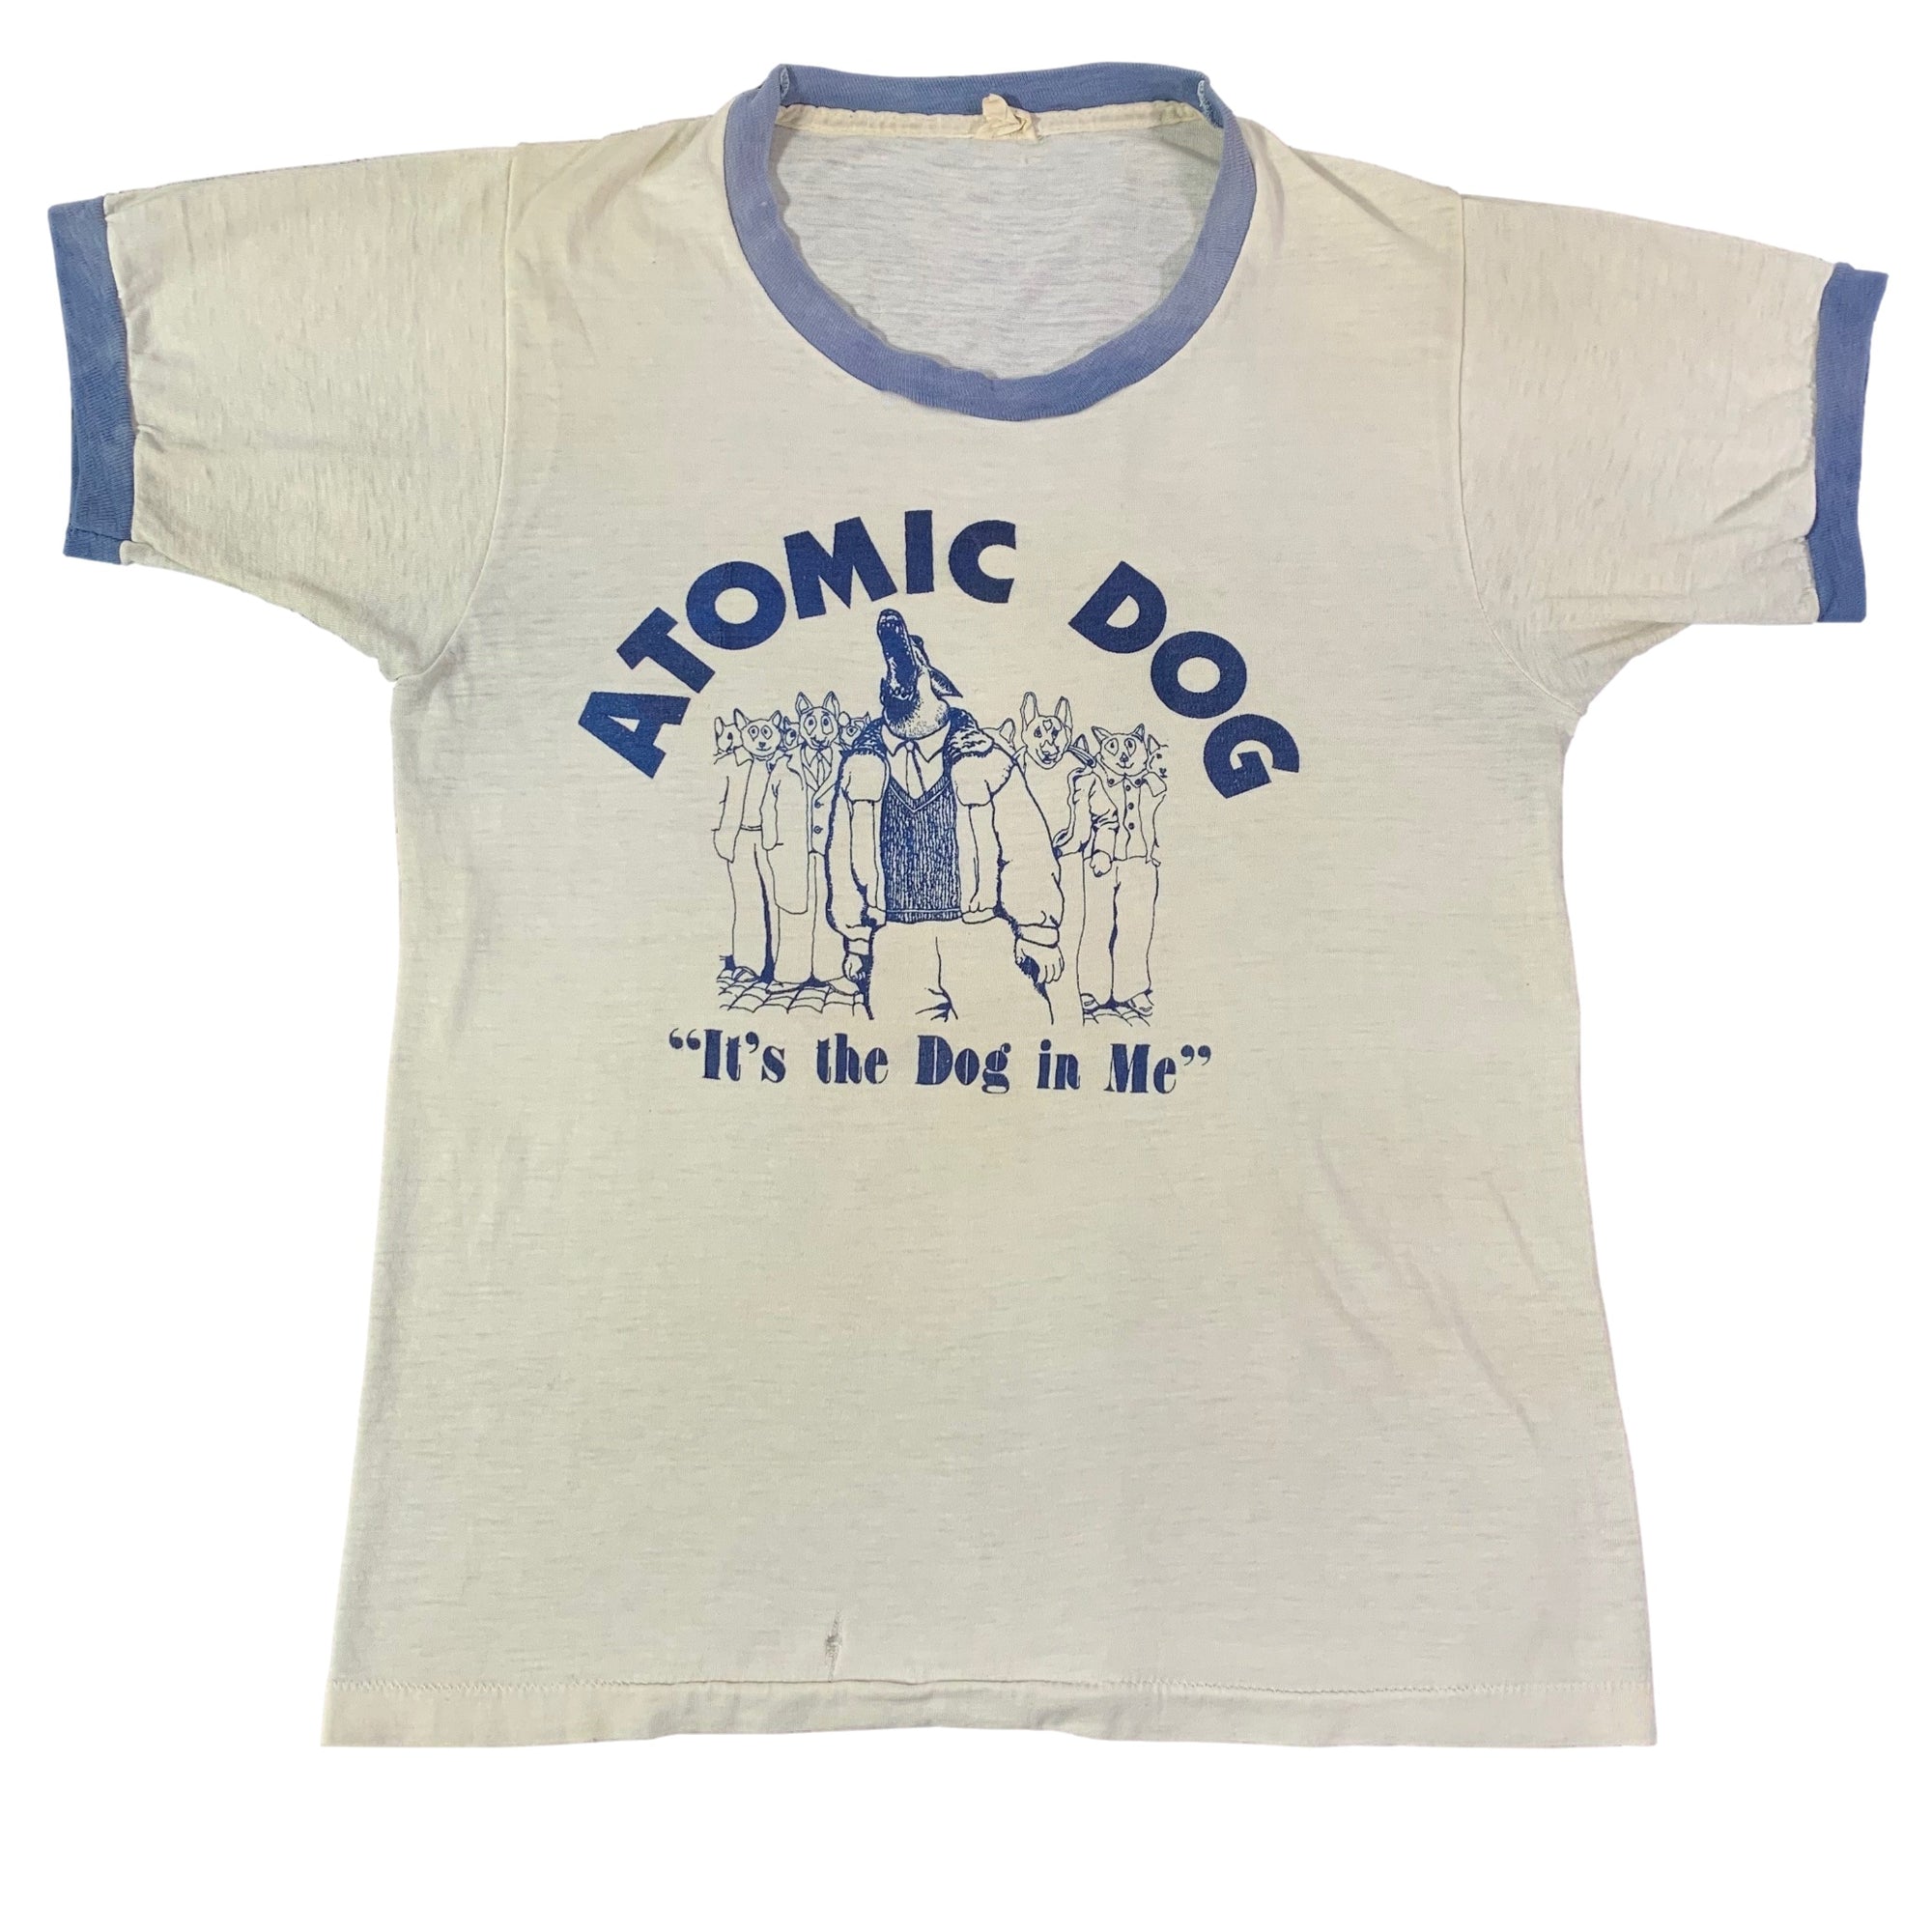 Vintage George Clinton Parliament Funkadelic "Atomic Dog" Ringer Shirt - jointcustodydc